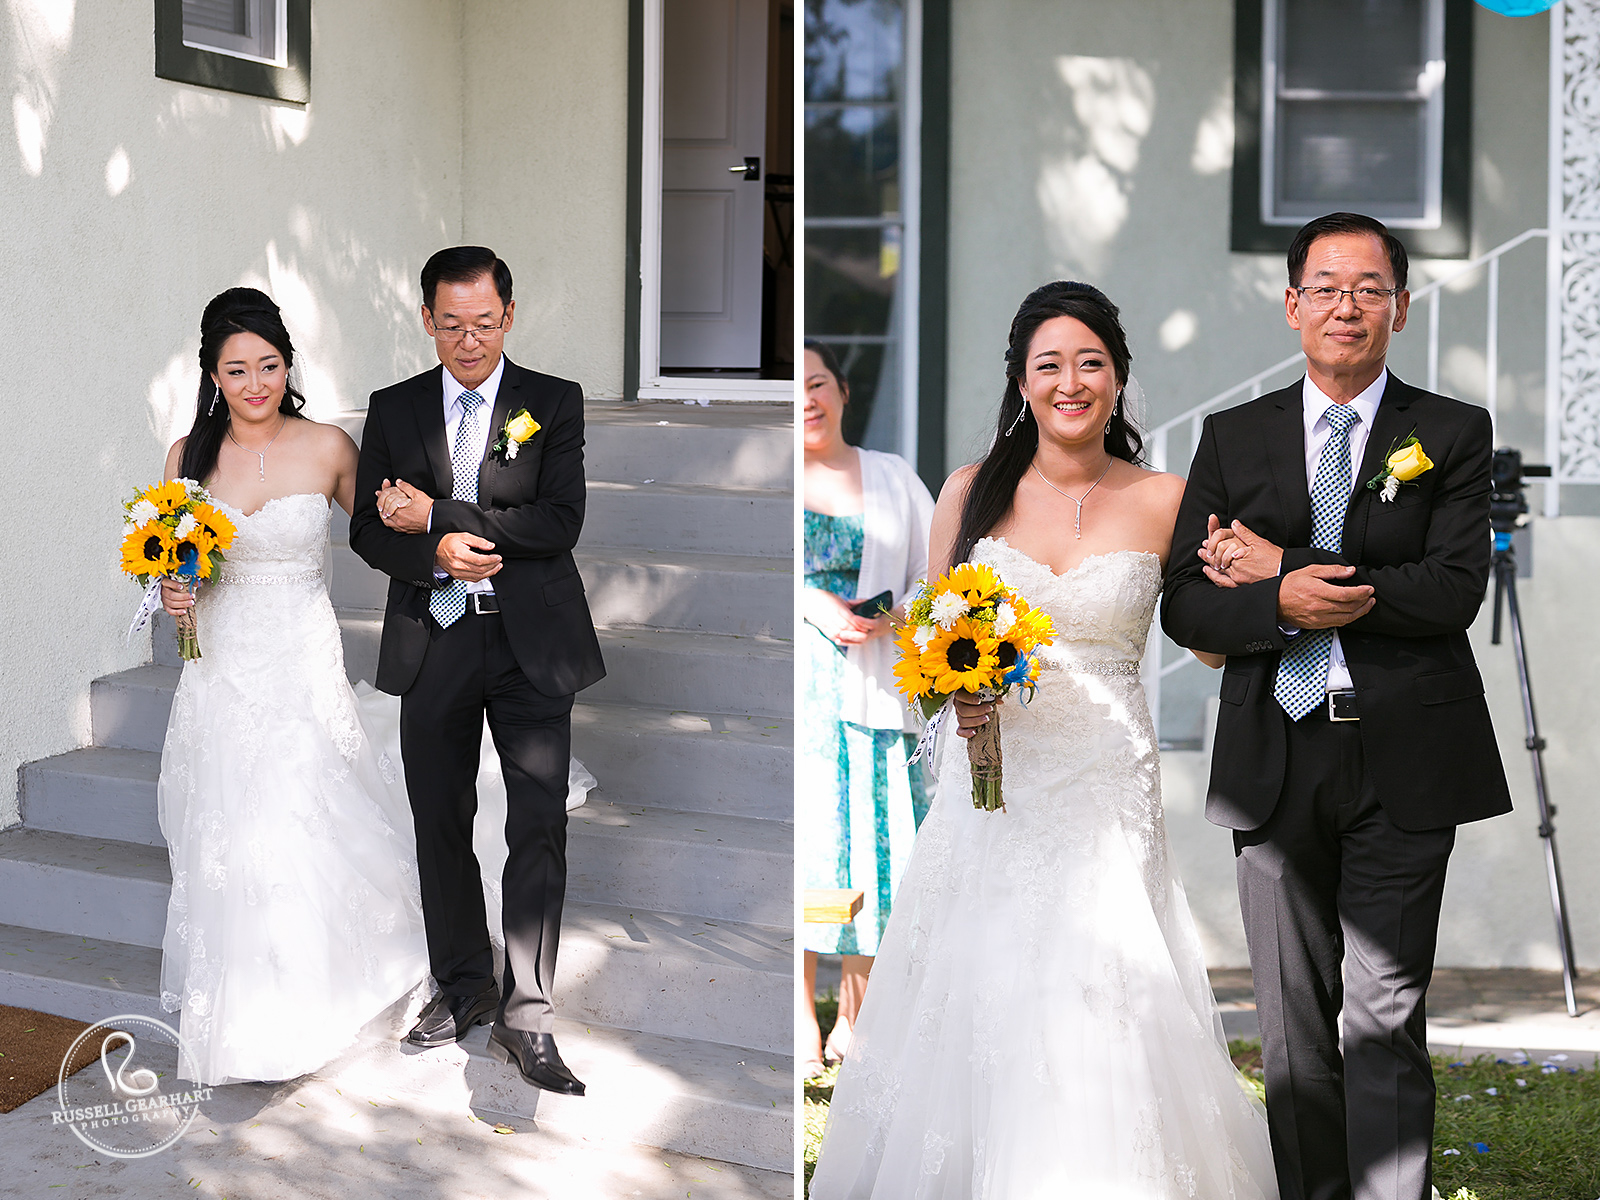 Father walks bride down the aisle – Altadena Backyard Wedding – Russell Gearhart Photography – www.gearhartphoto.com